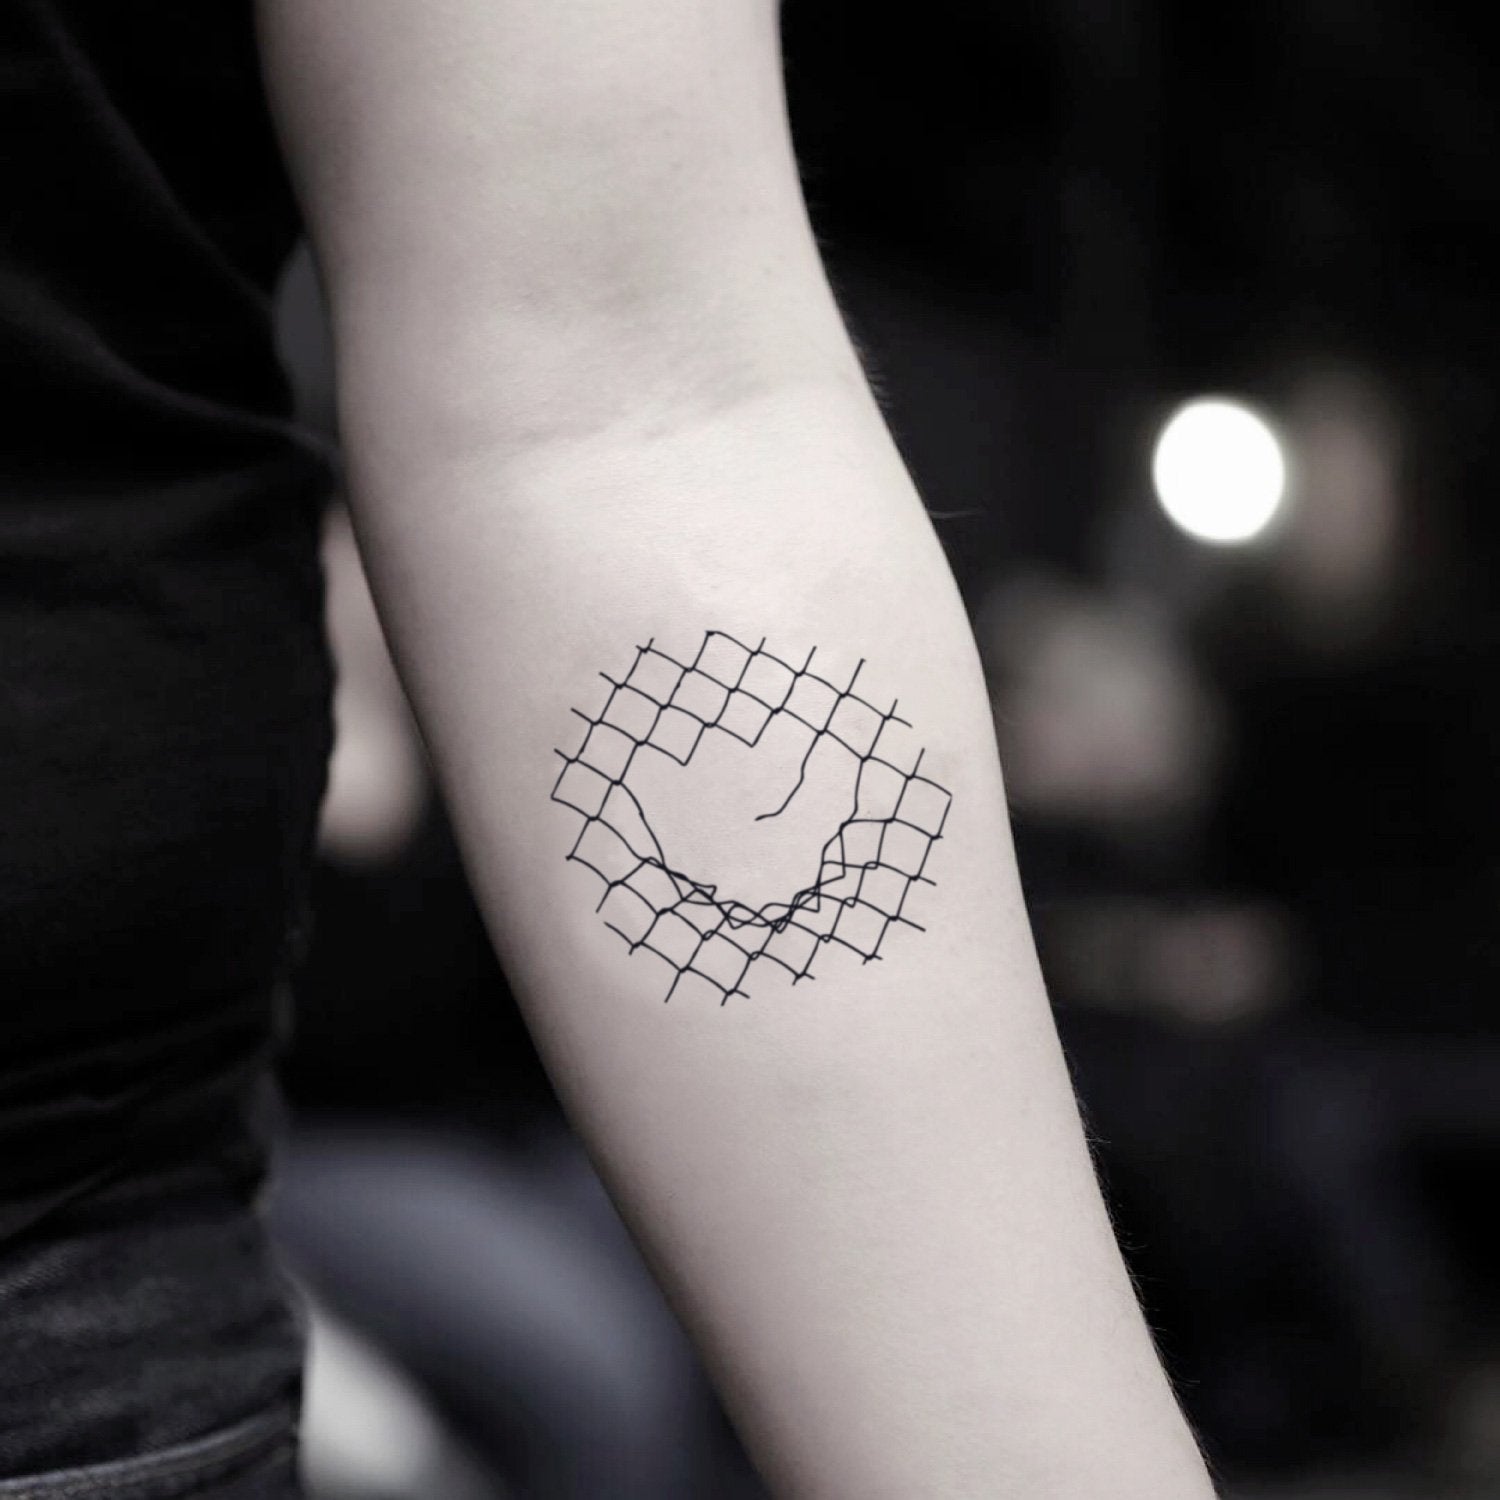 fake small chain link fence illustrative temporary tattoo sticker design idea on inner arm